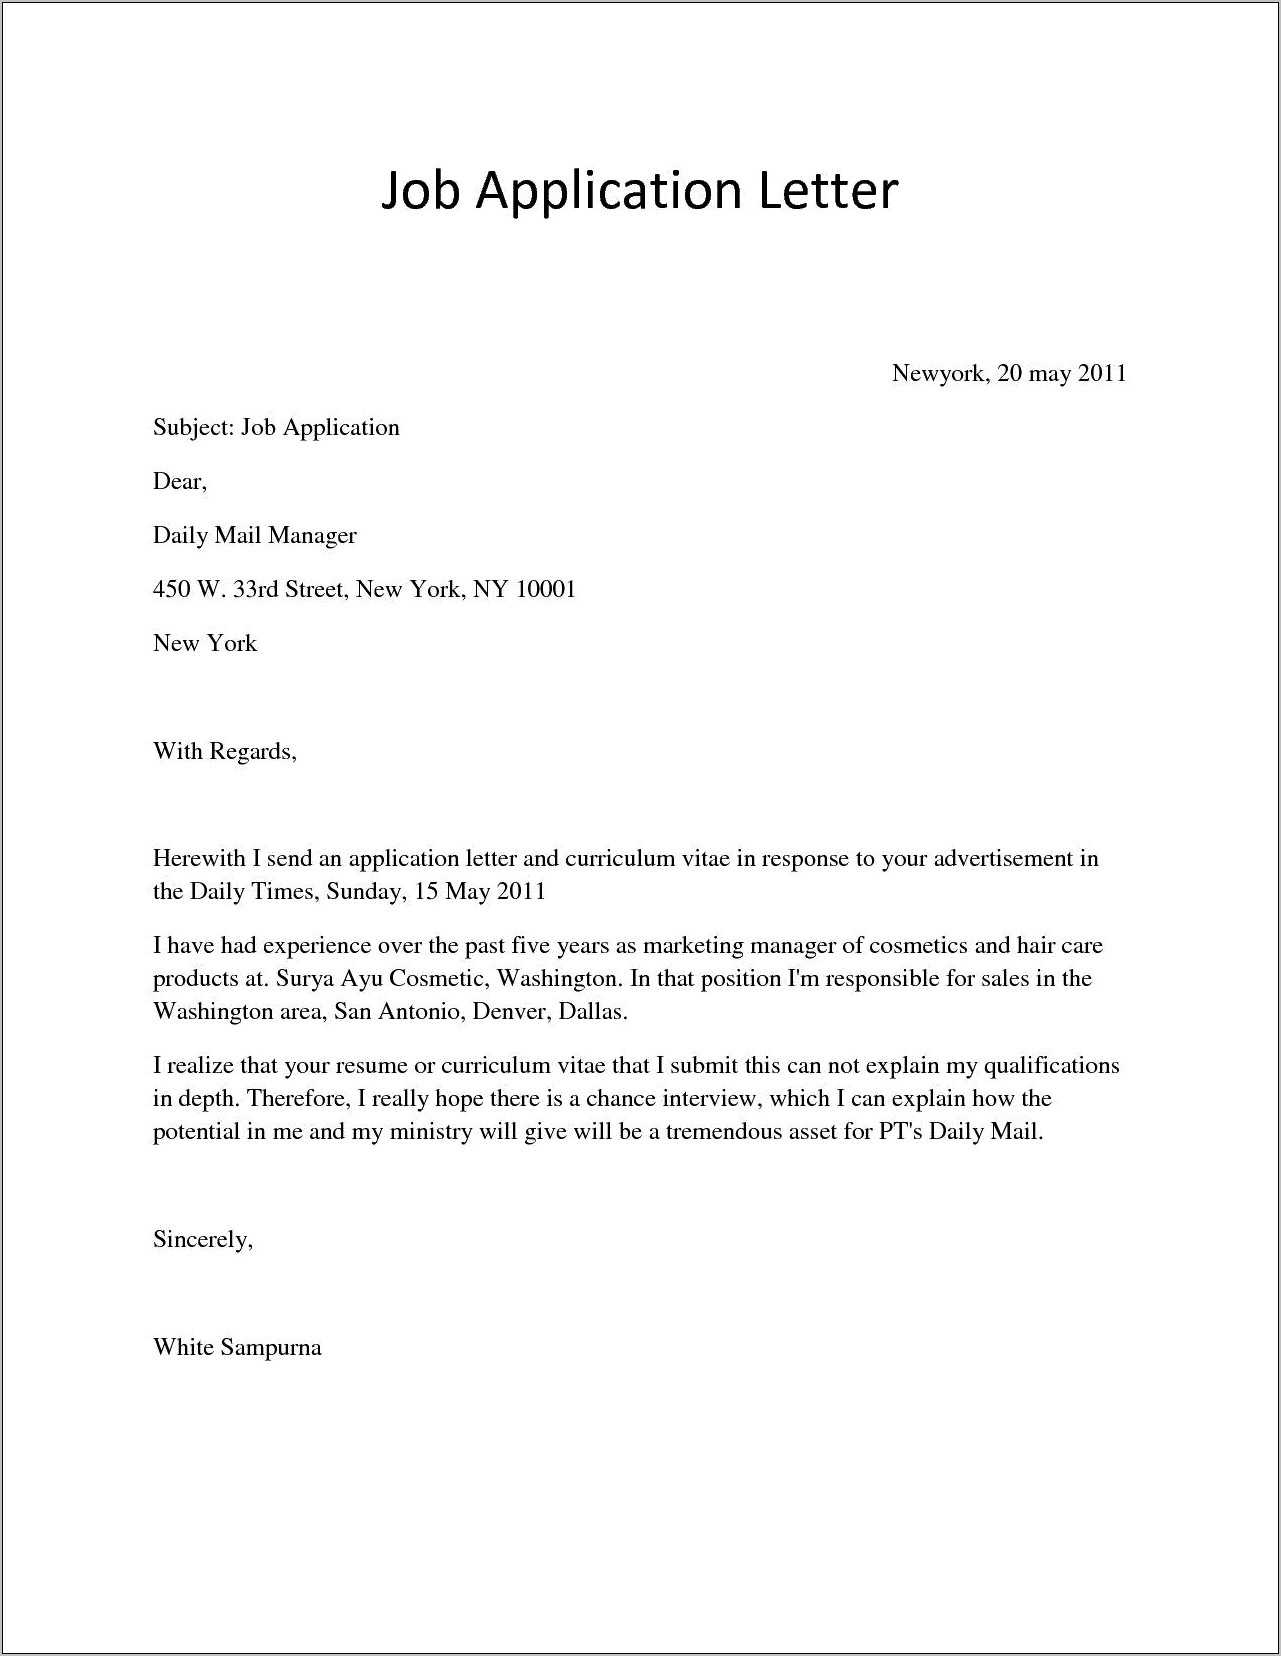 Job Application Letter And Resume Model